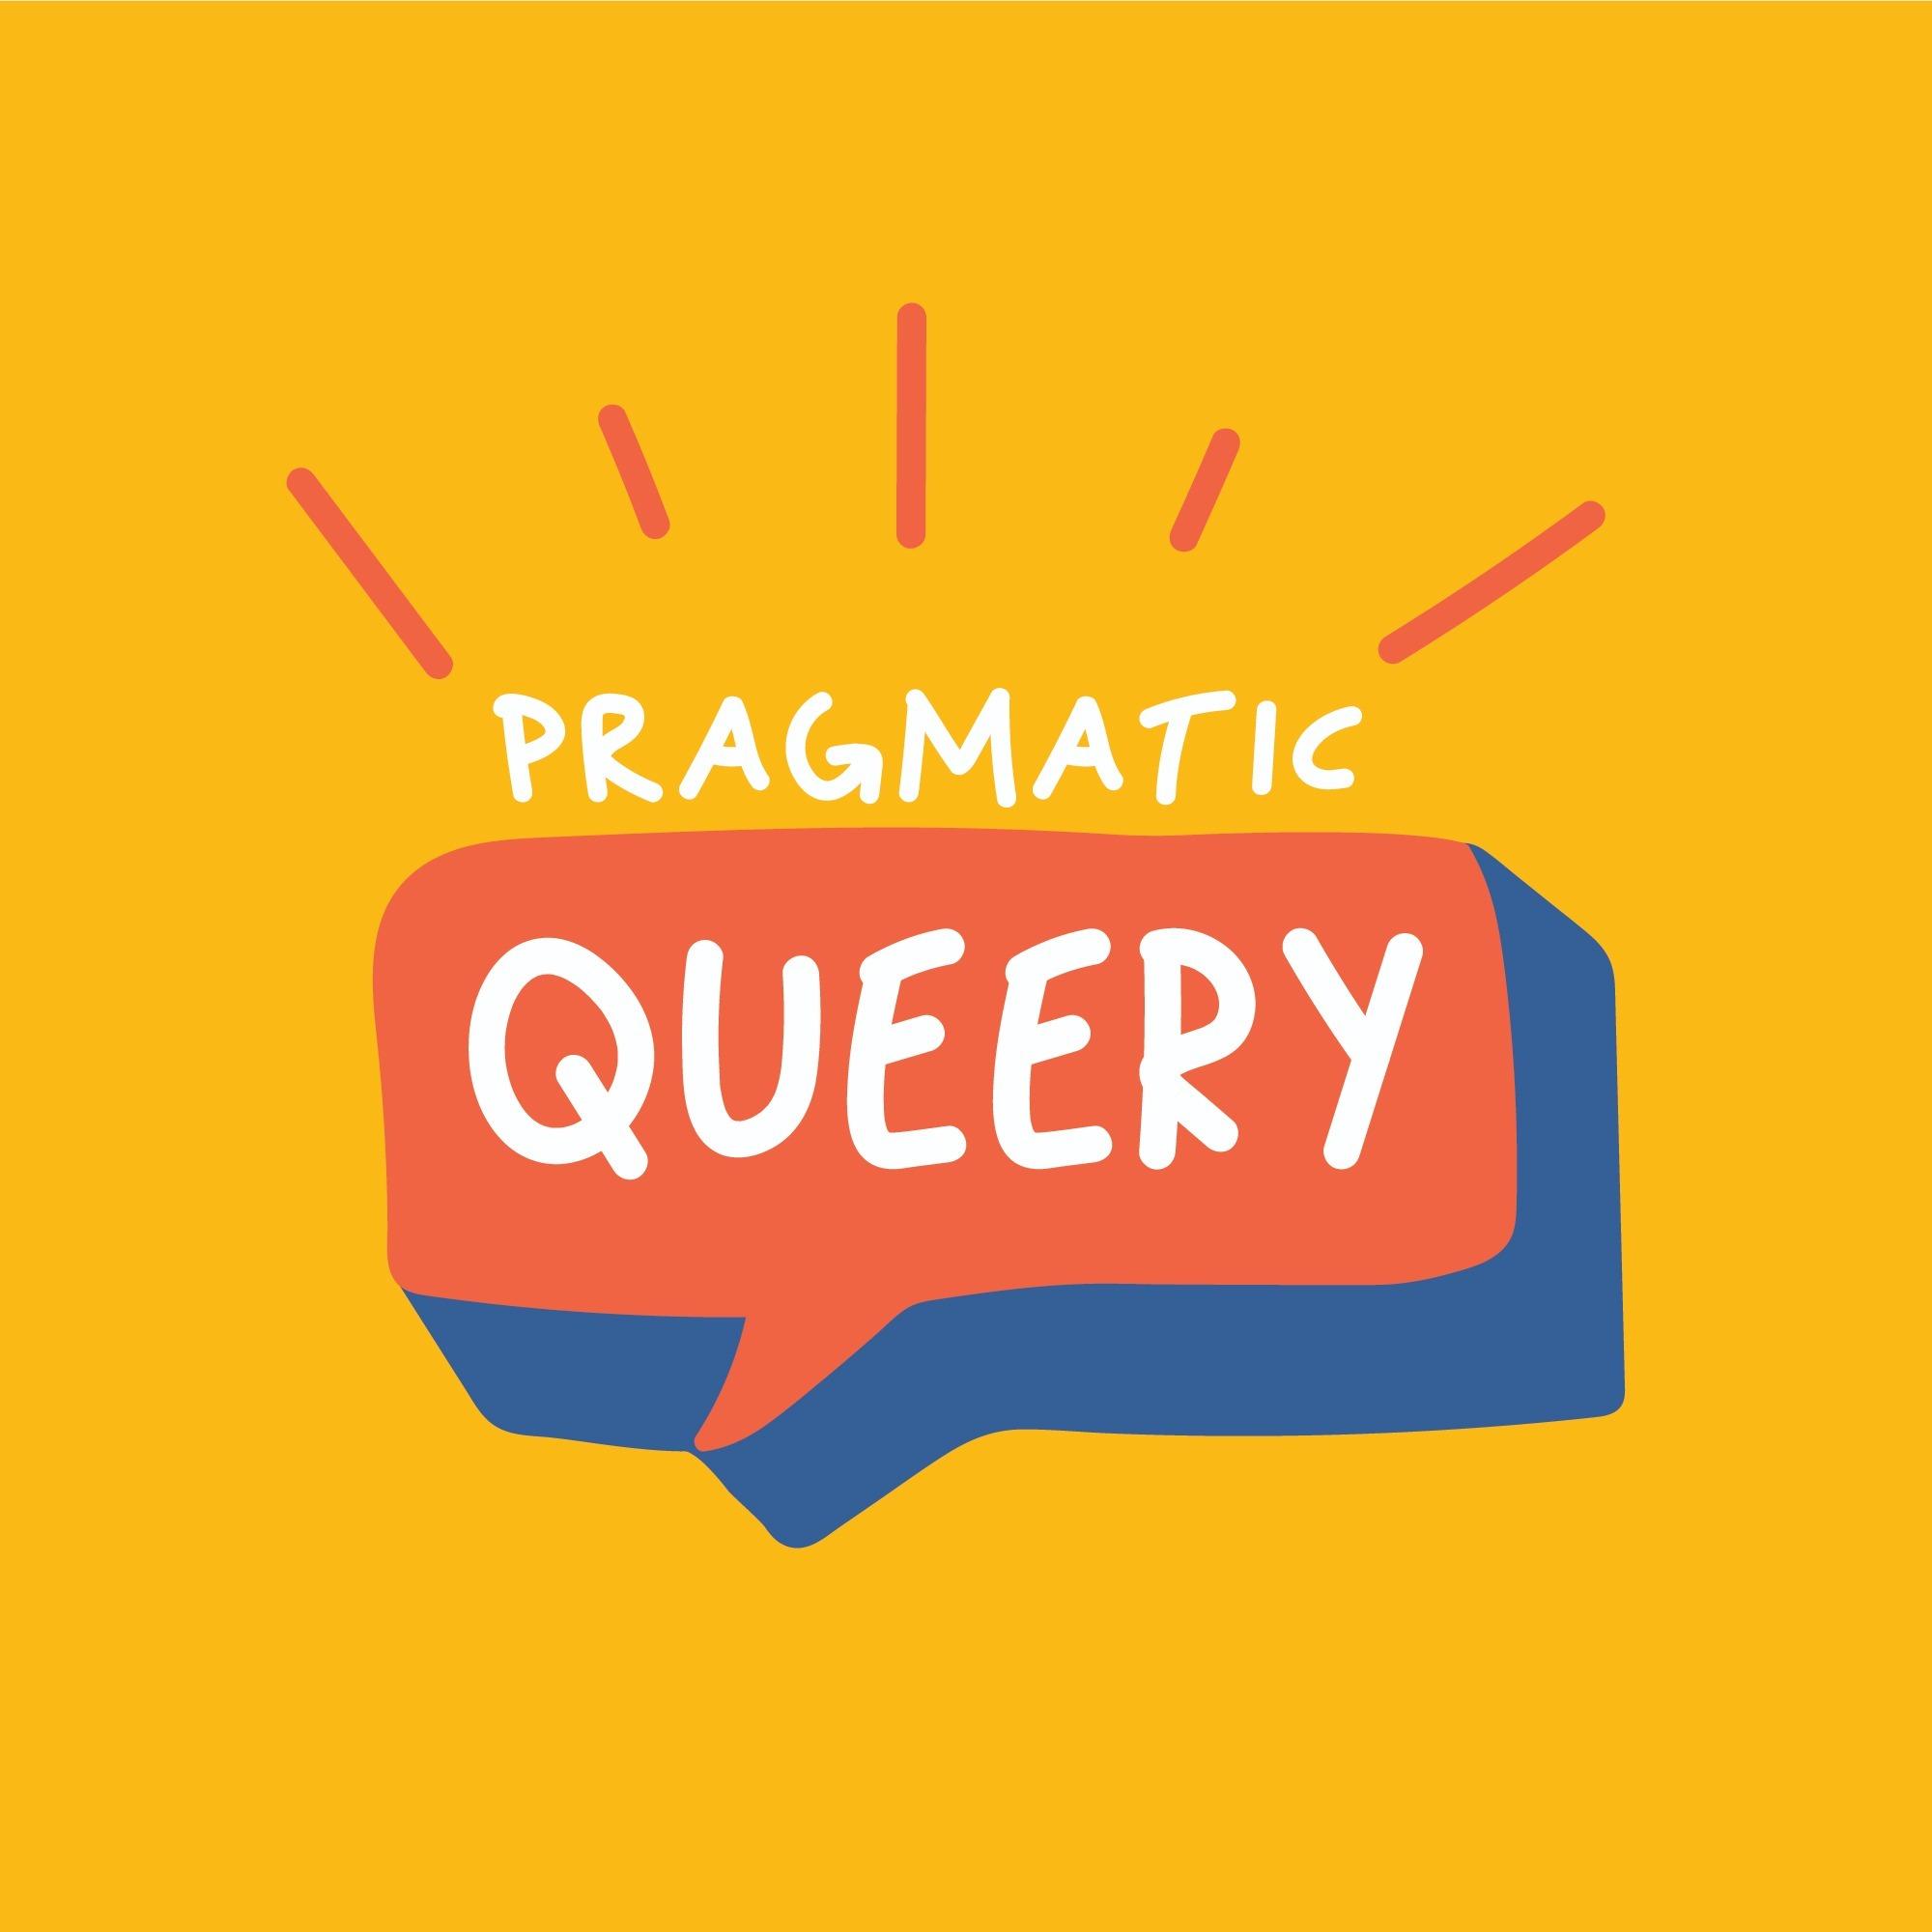 Pragmatic Queery